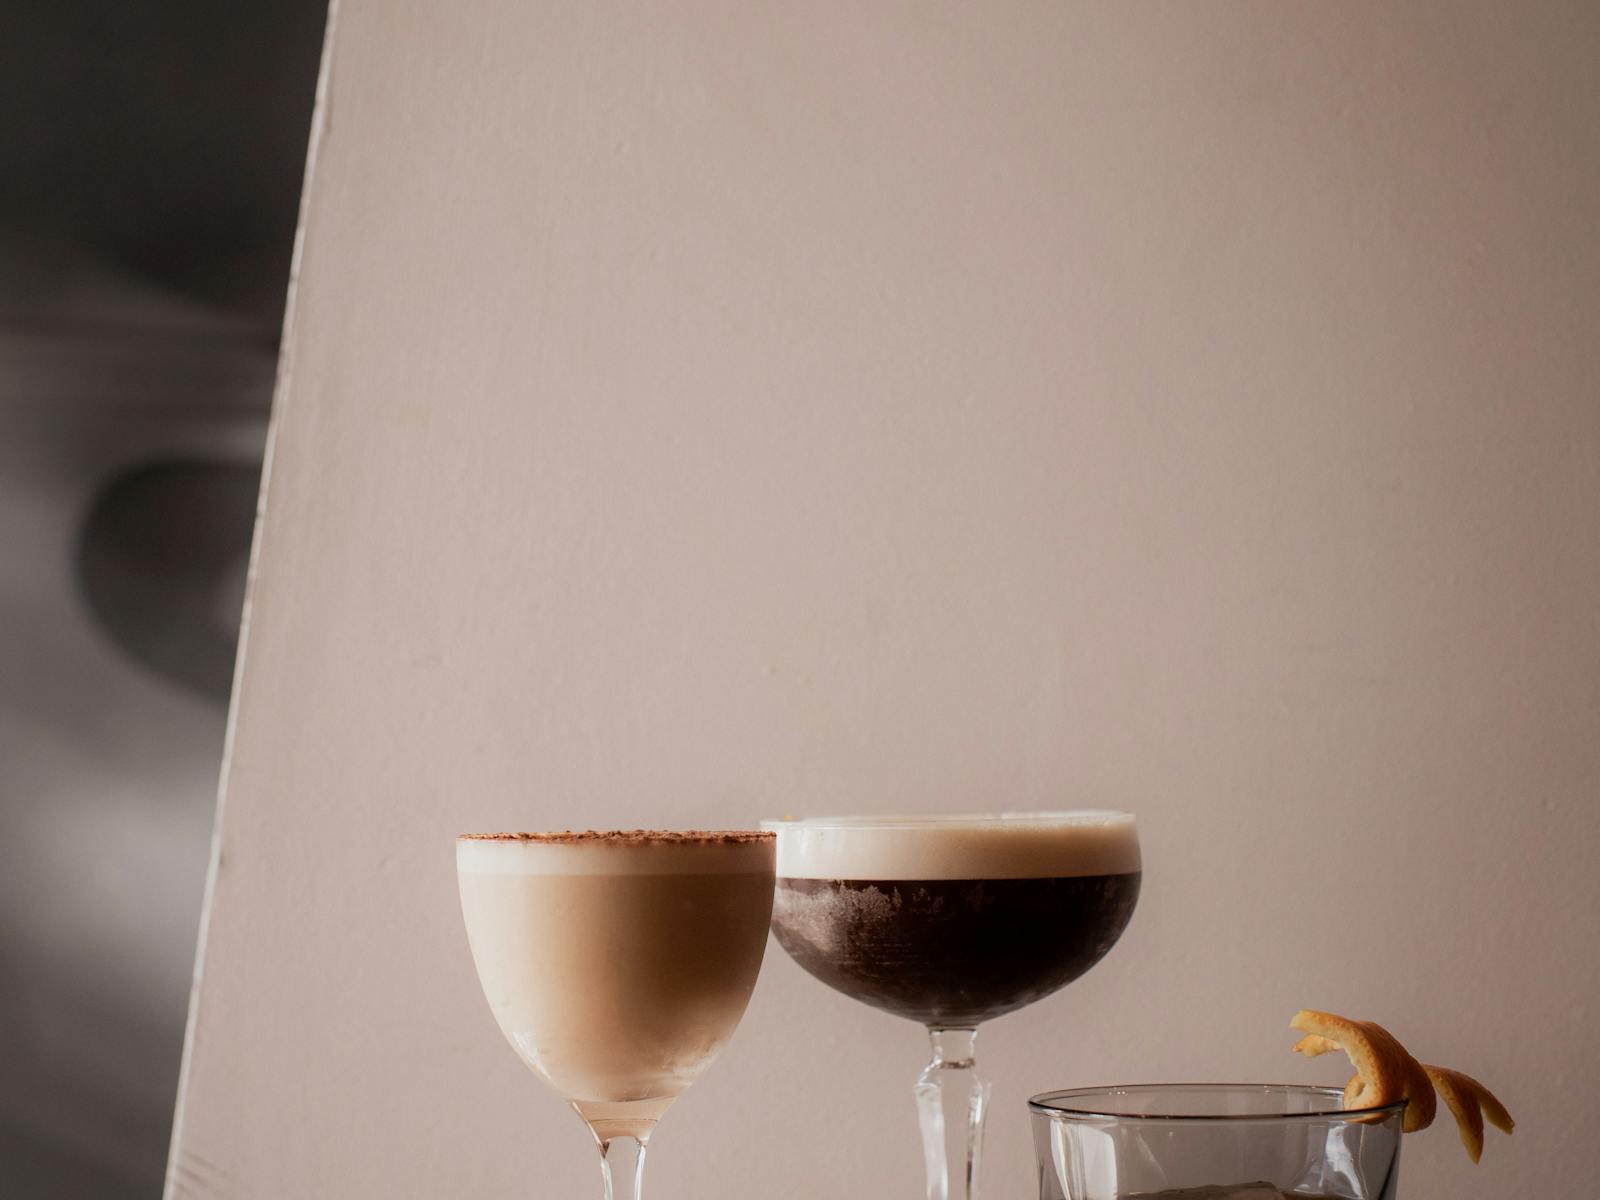 Three coffee cocktails including Tiramisu, Espresso Martini and Coffee & Cigarettes